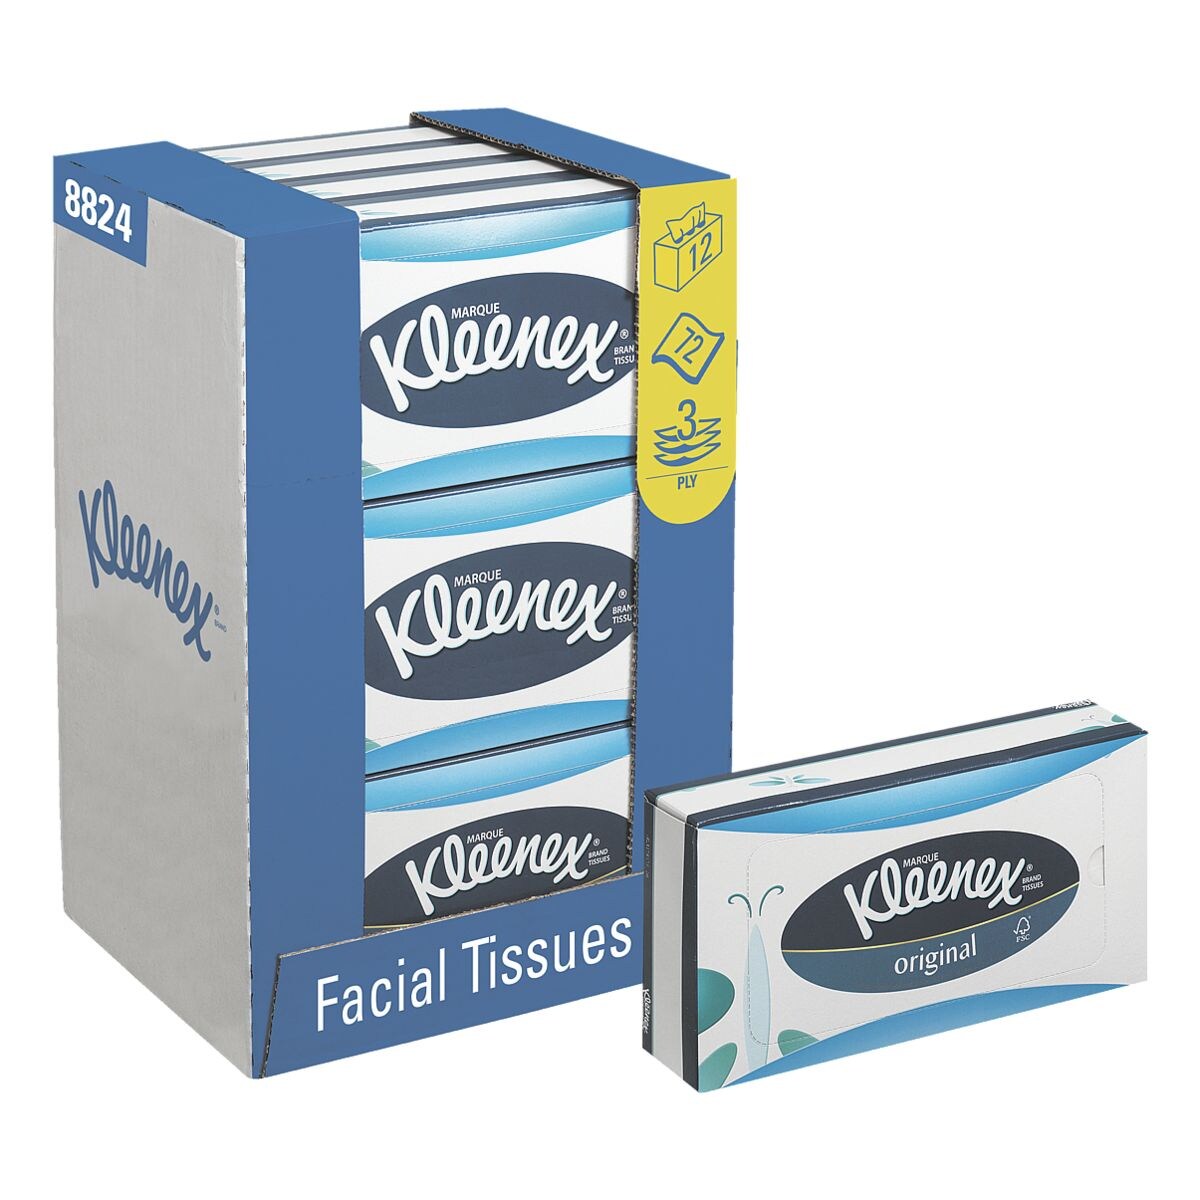 Kleenex Kosmetiktcher Original 12x 72 Stck (864 Tcher)